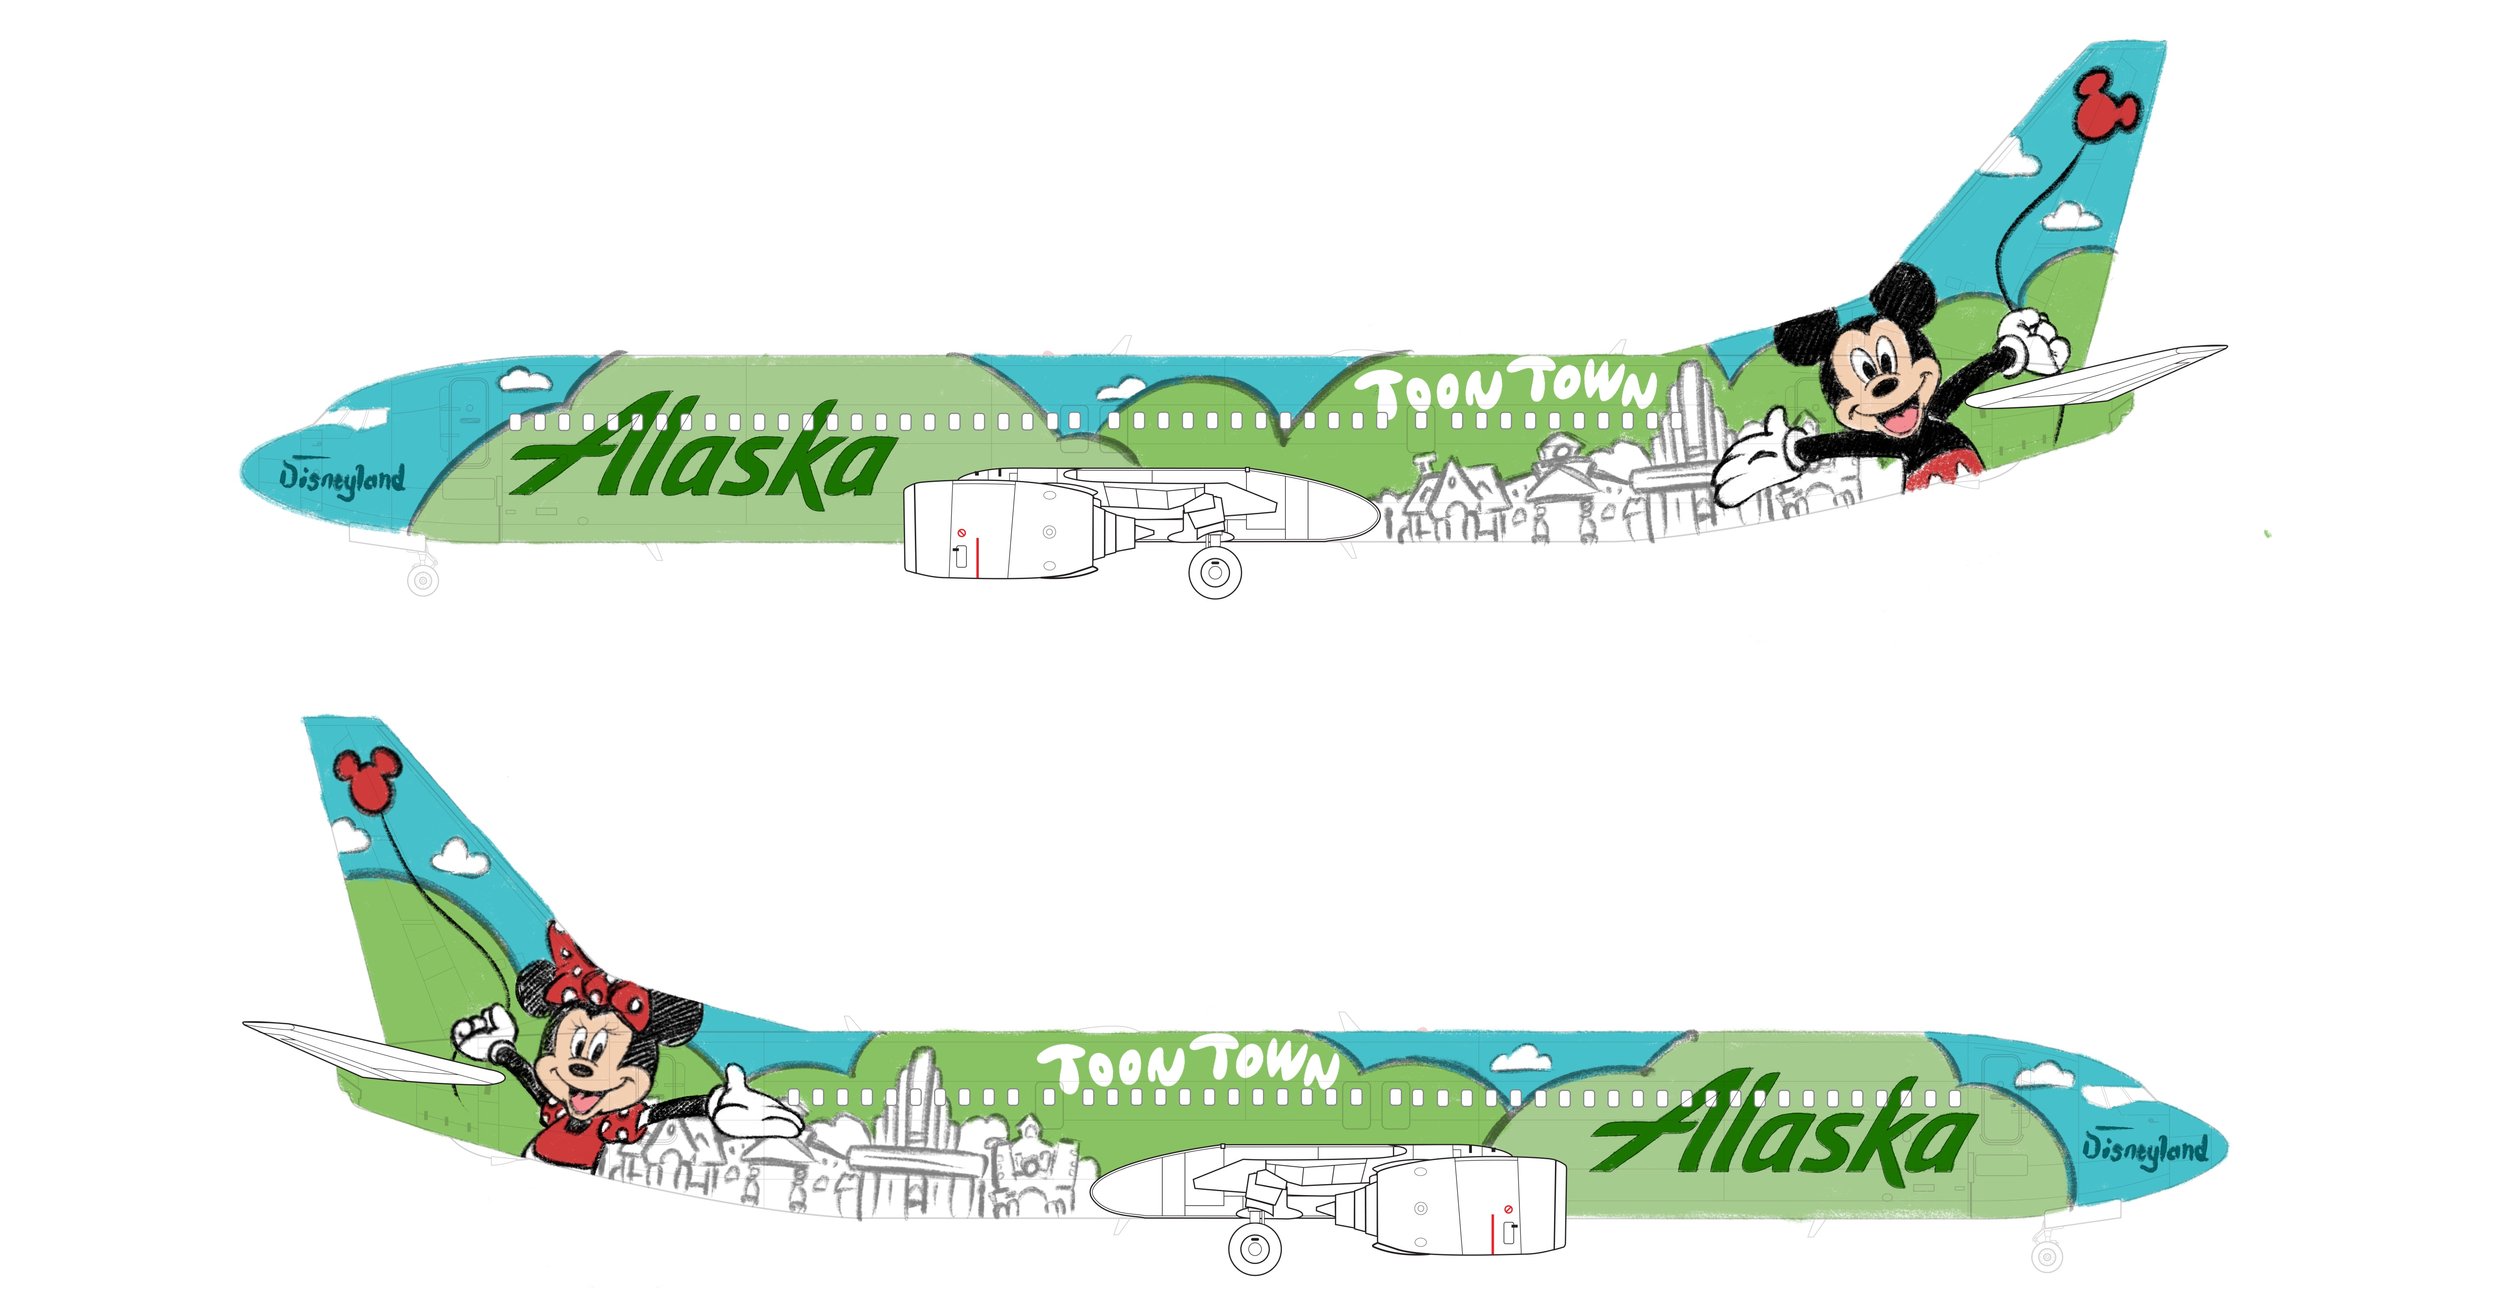 DLR_ToonTown_Alaska_Plane_Concept_1_Sketch_012423.JPG